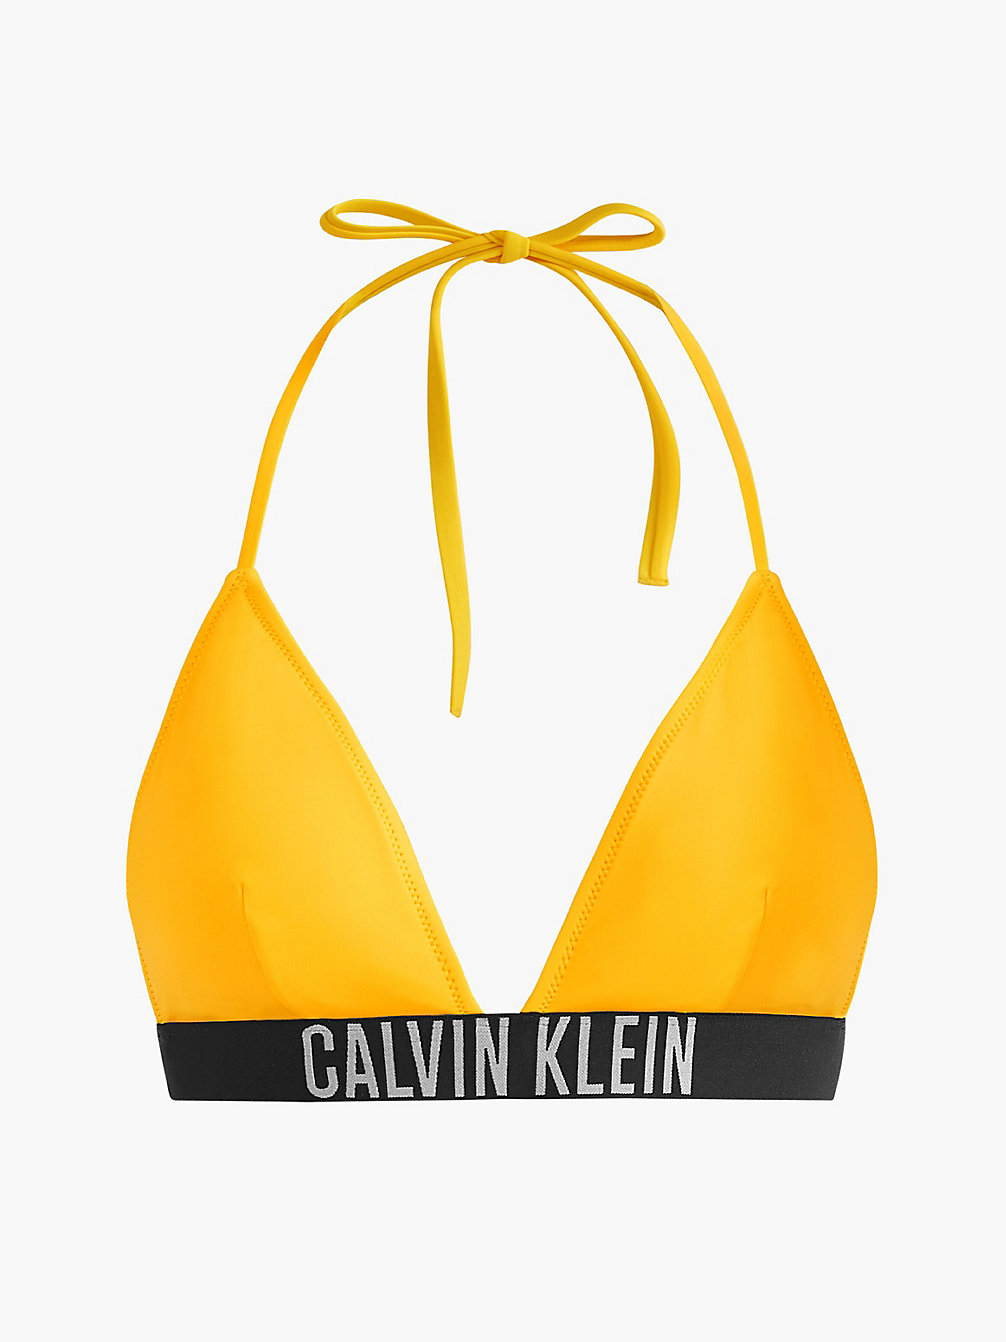 WARM YELLOW > Верх бикини-треугольник - Intense Power > undefined Женщины - Calvin Klein